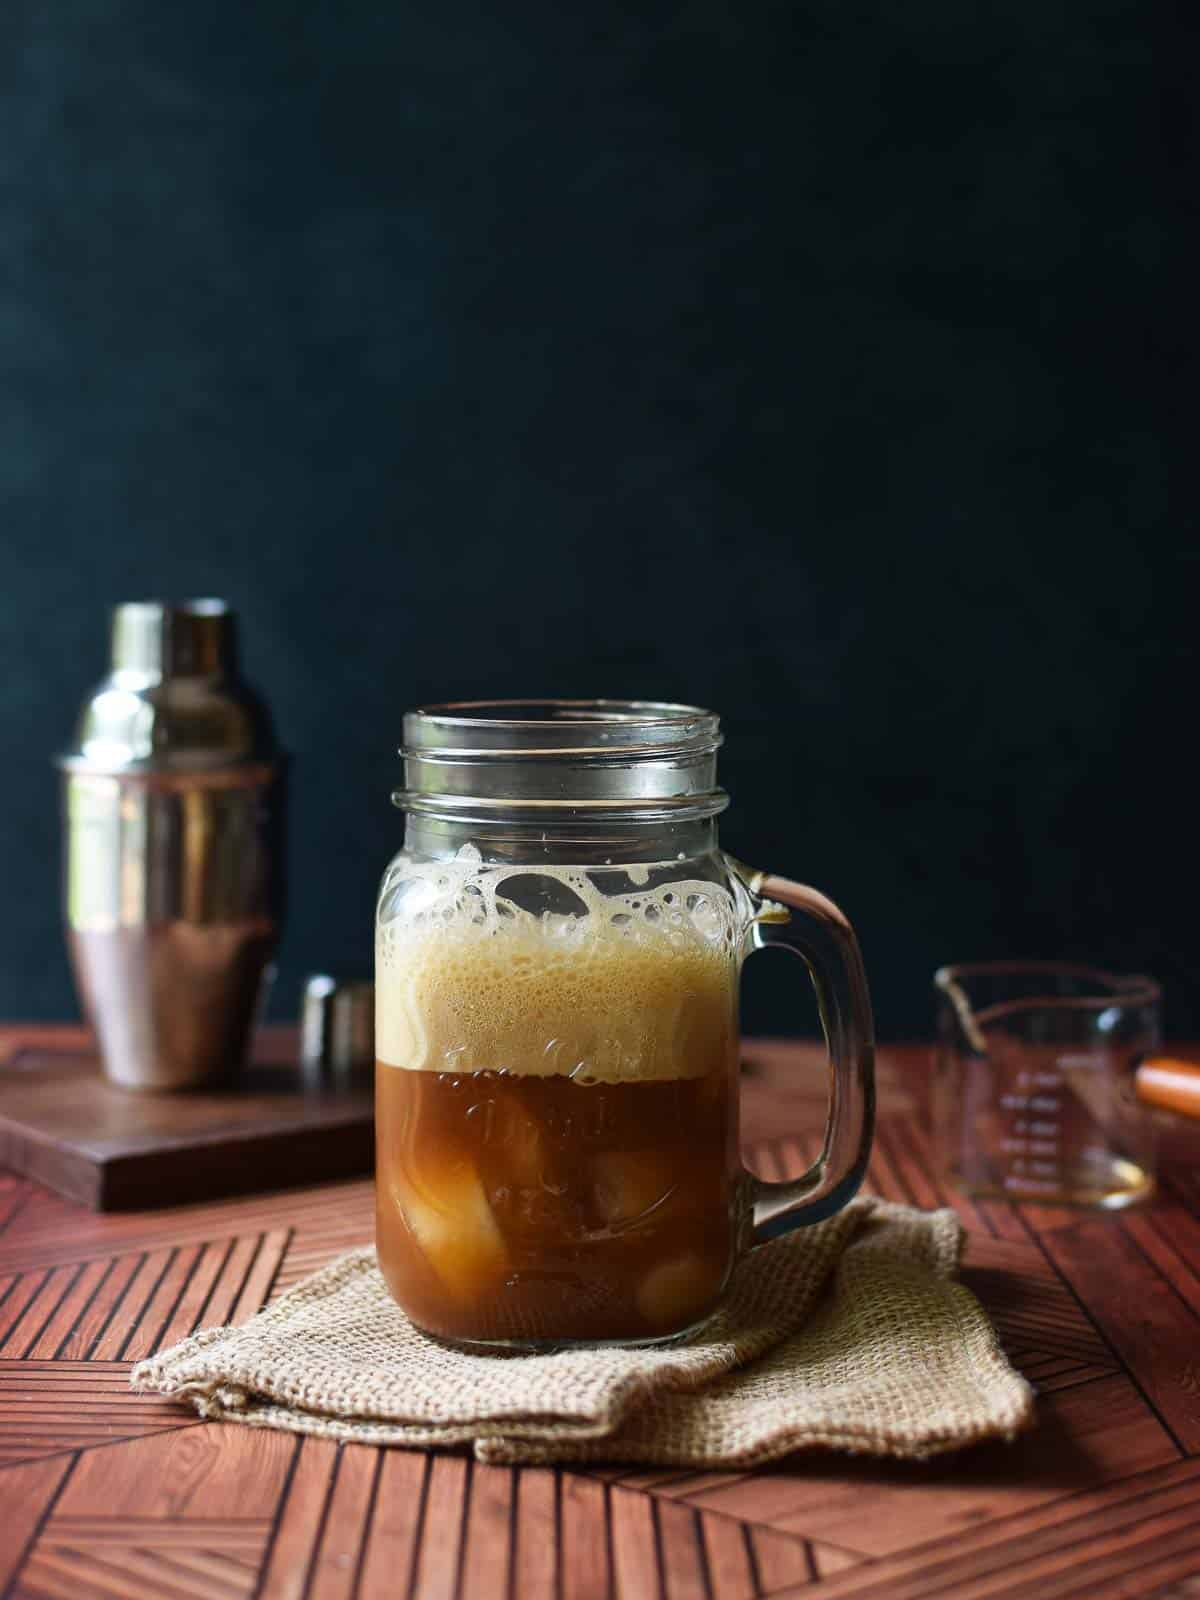 Brown sugar shaken chai tea in a glass mug with a handle.